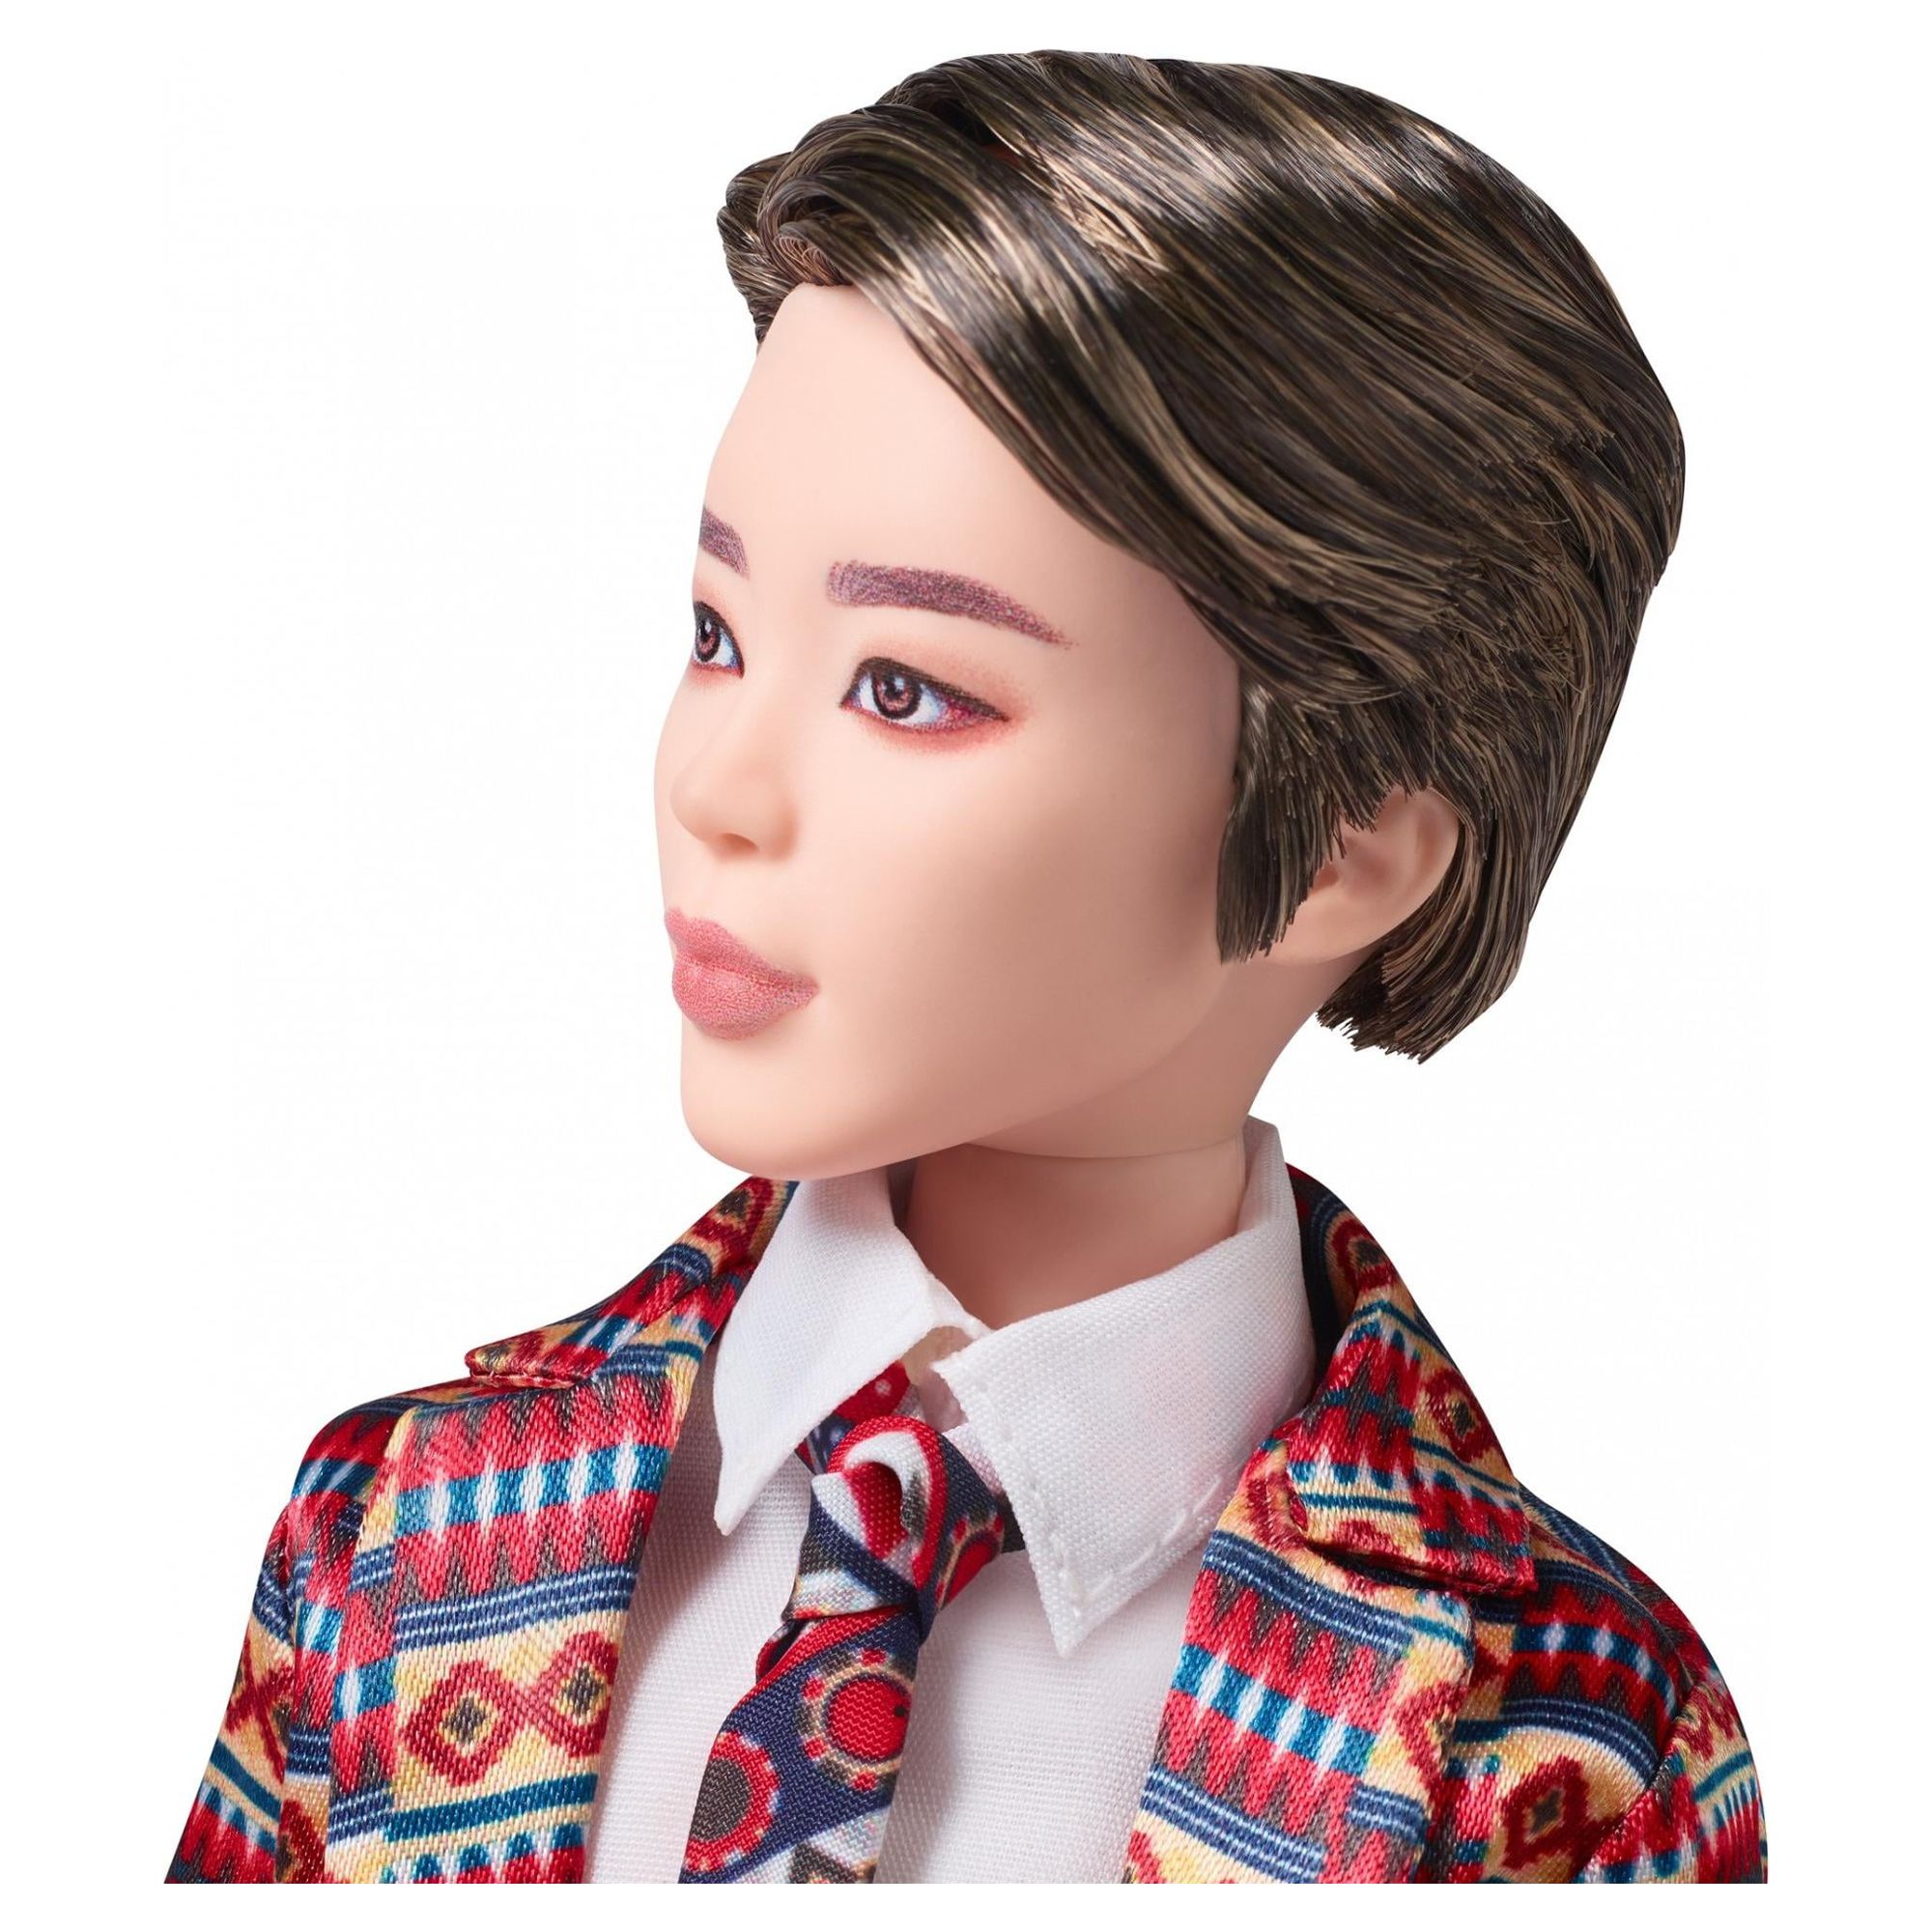 BTS Jimin Idol Doll - image 4 of 8